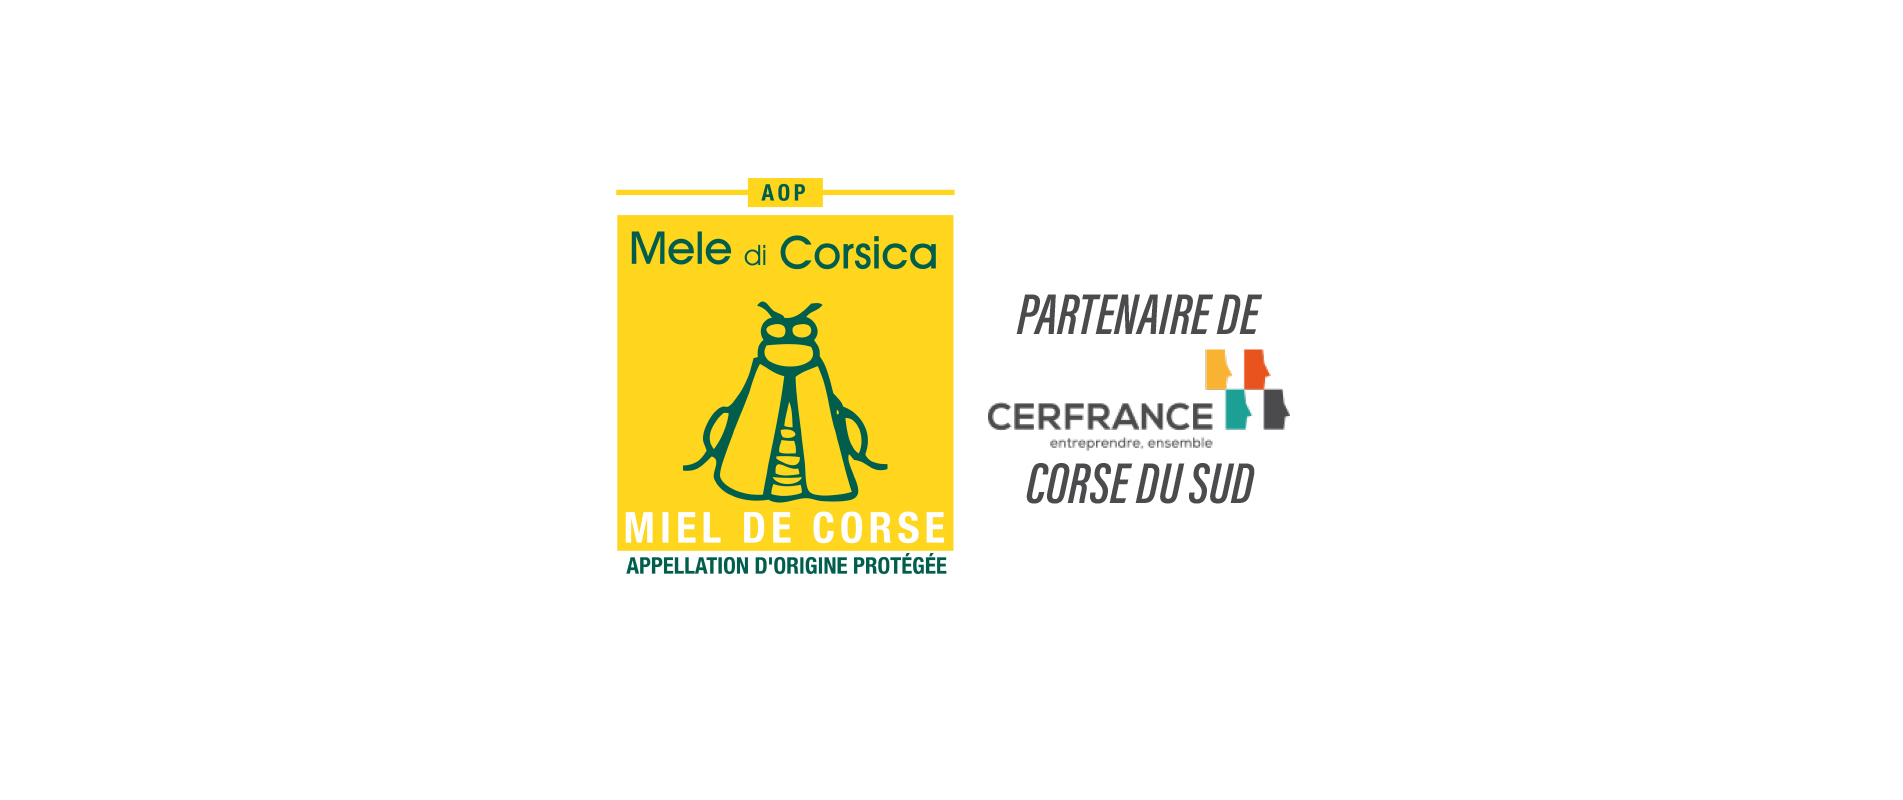 Partenariat : AOP Mele di Corsica